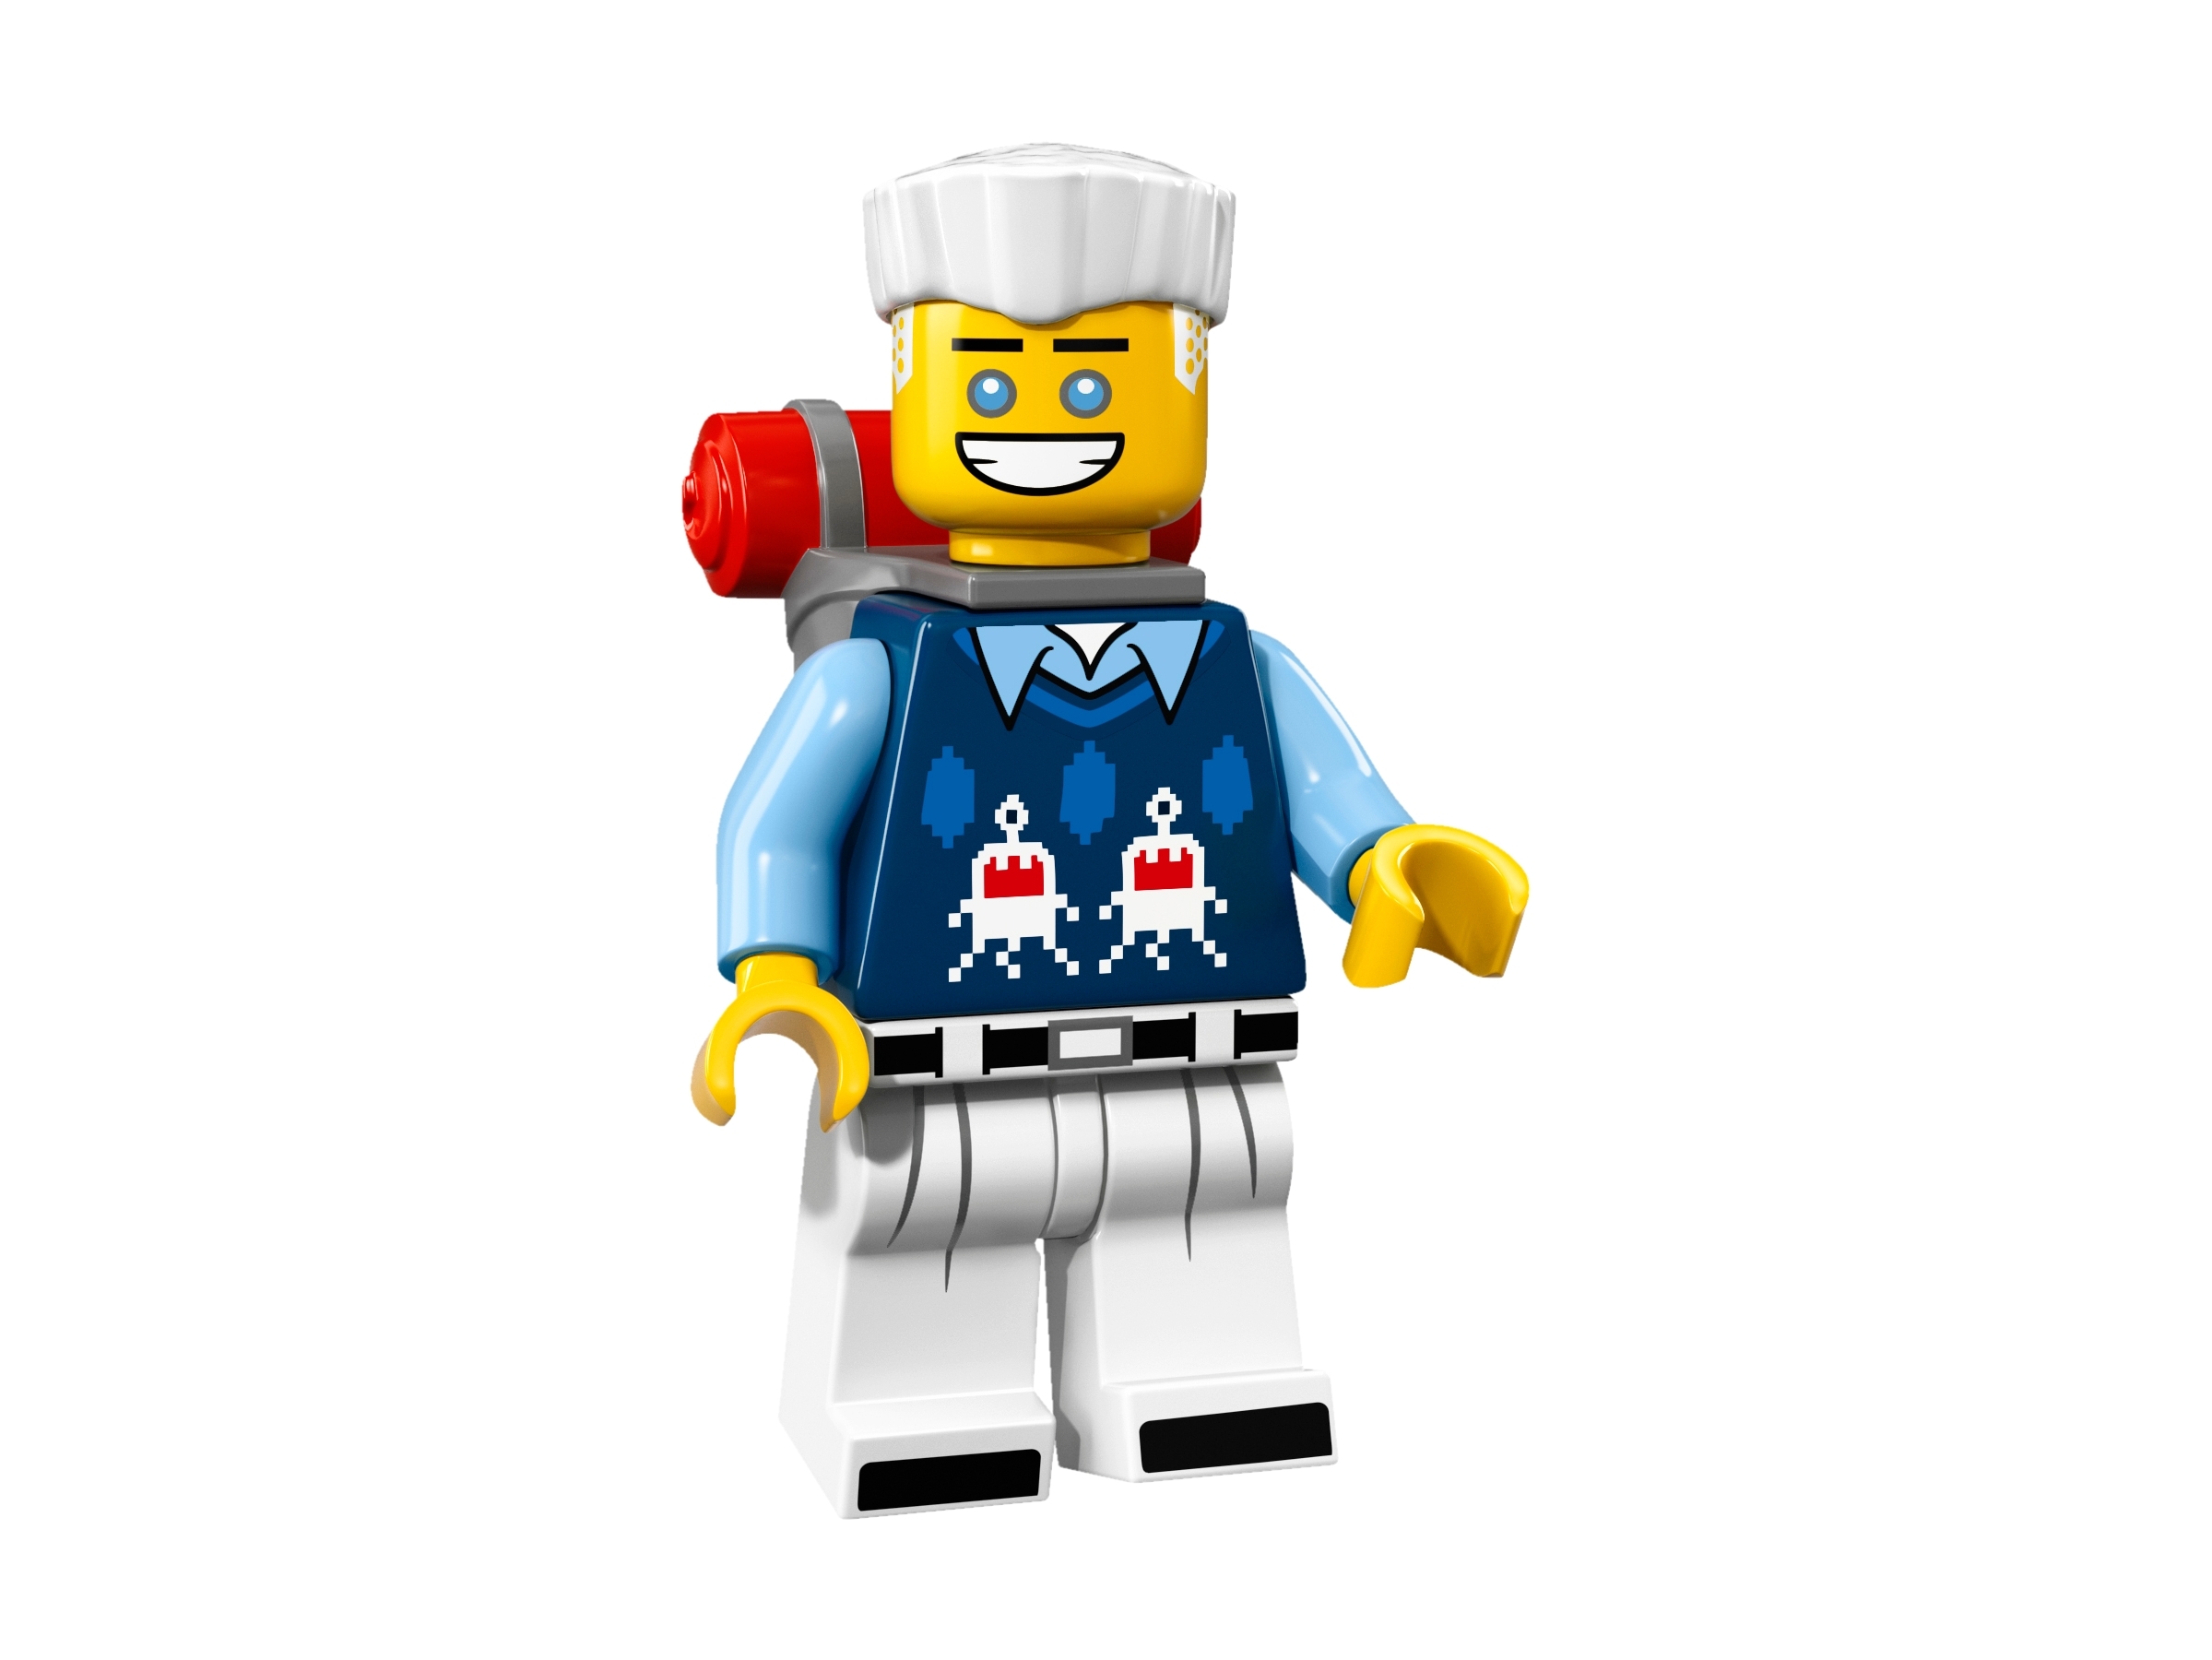 GPL Tech LEGO NINJAGO MOVIE Factory Sealed! 71019 LEGO MINIFIGURES 